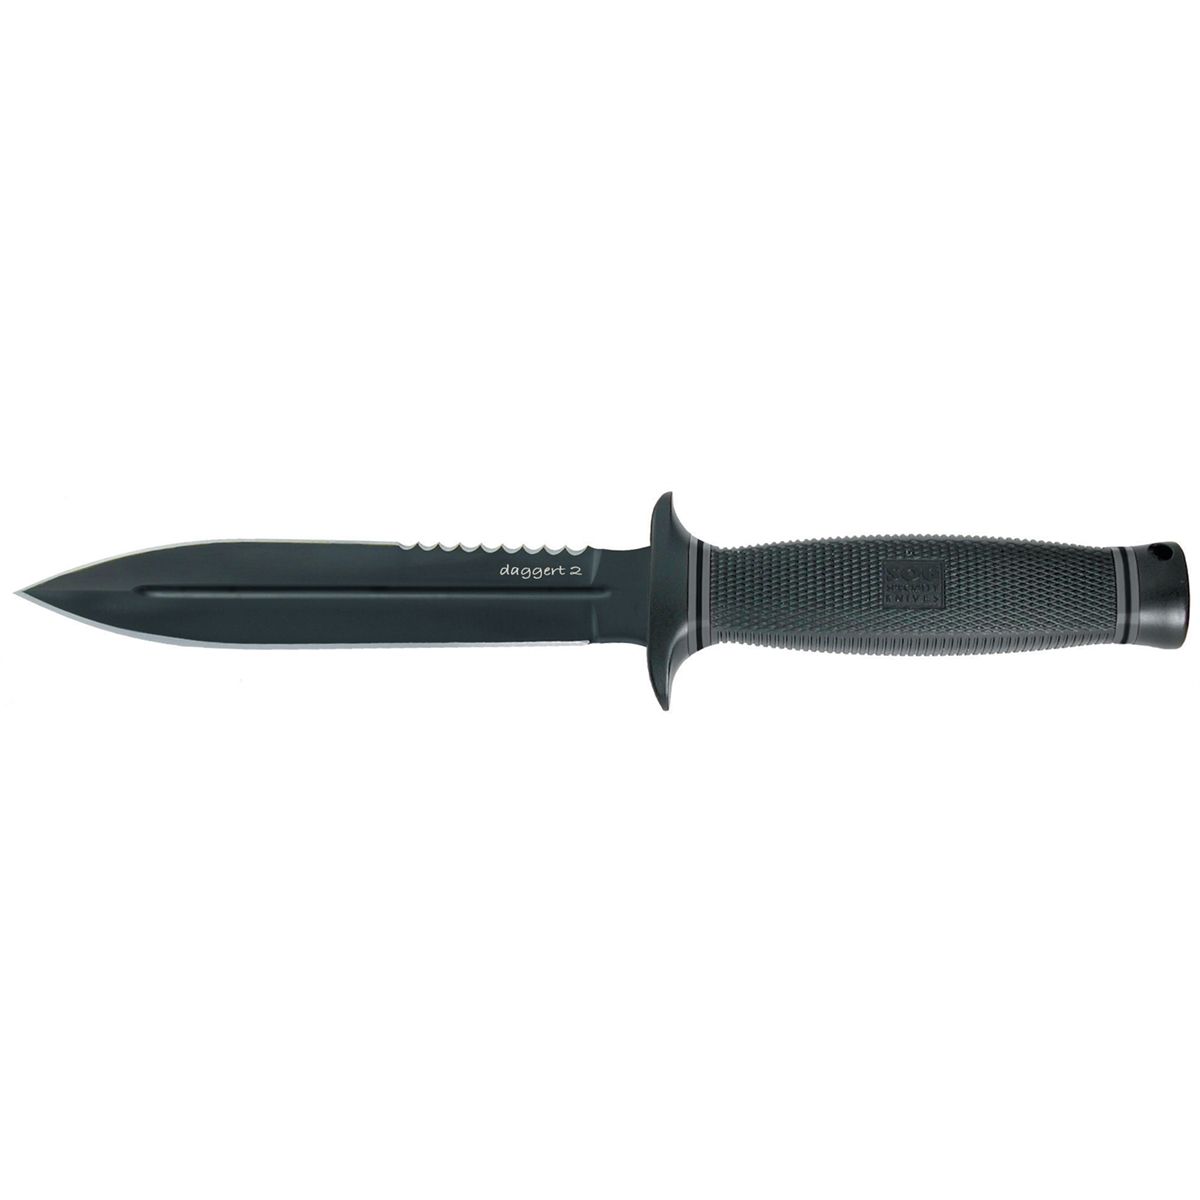 Daggert 2 Fixed Blade Military Knife - 11.85 In